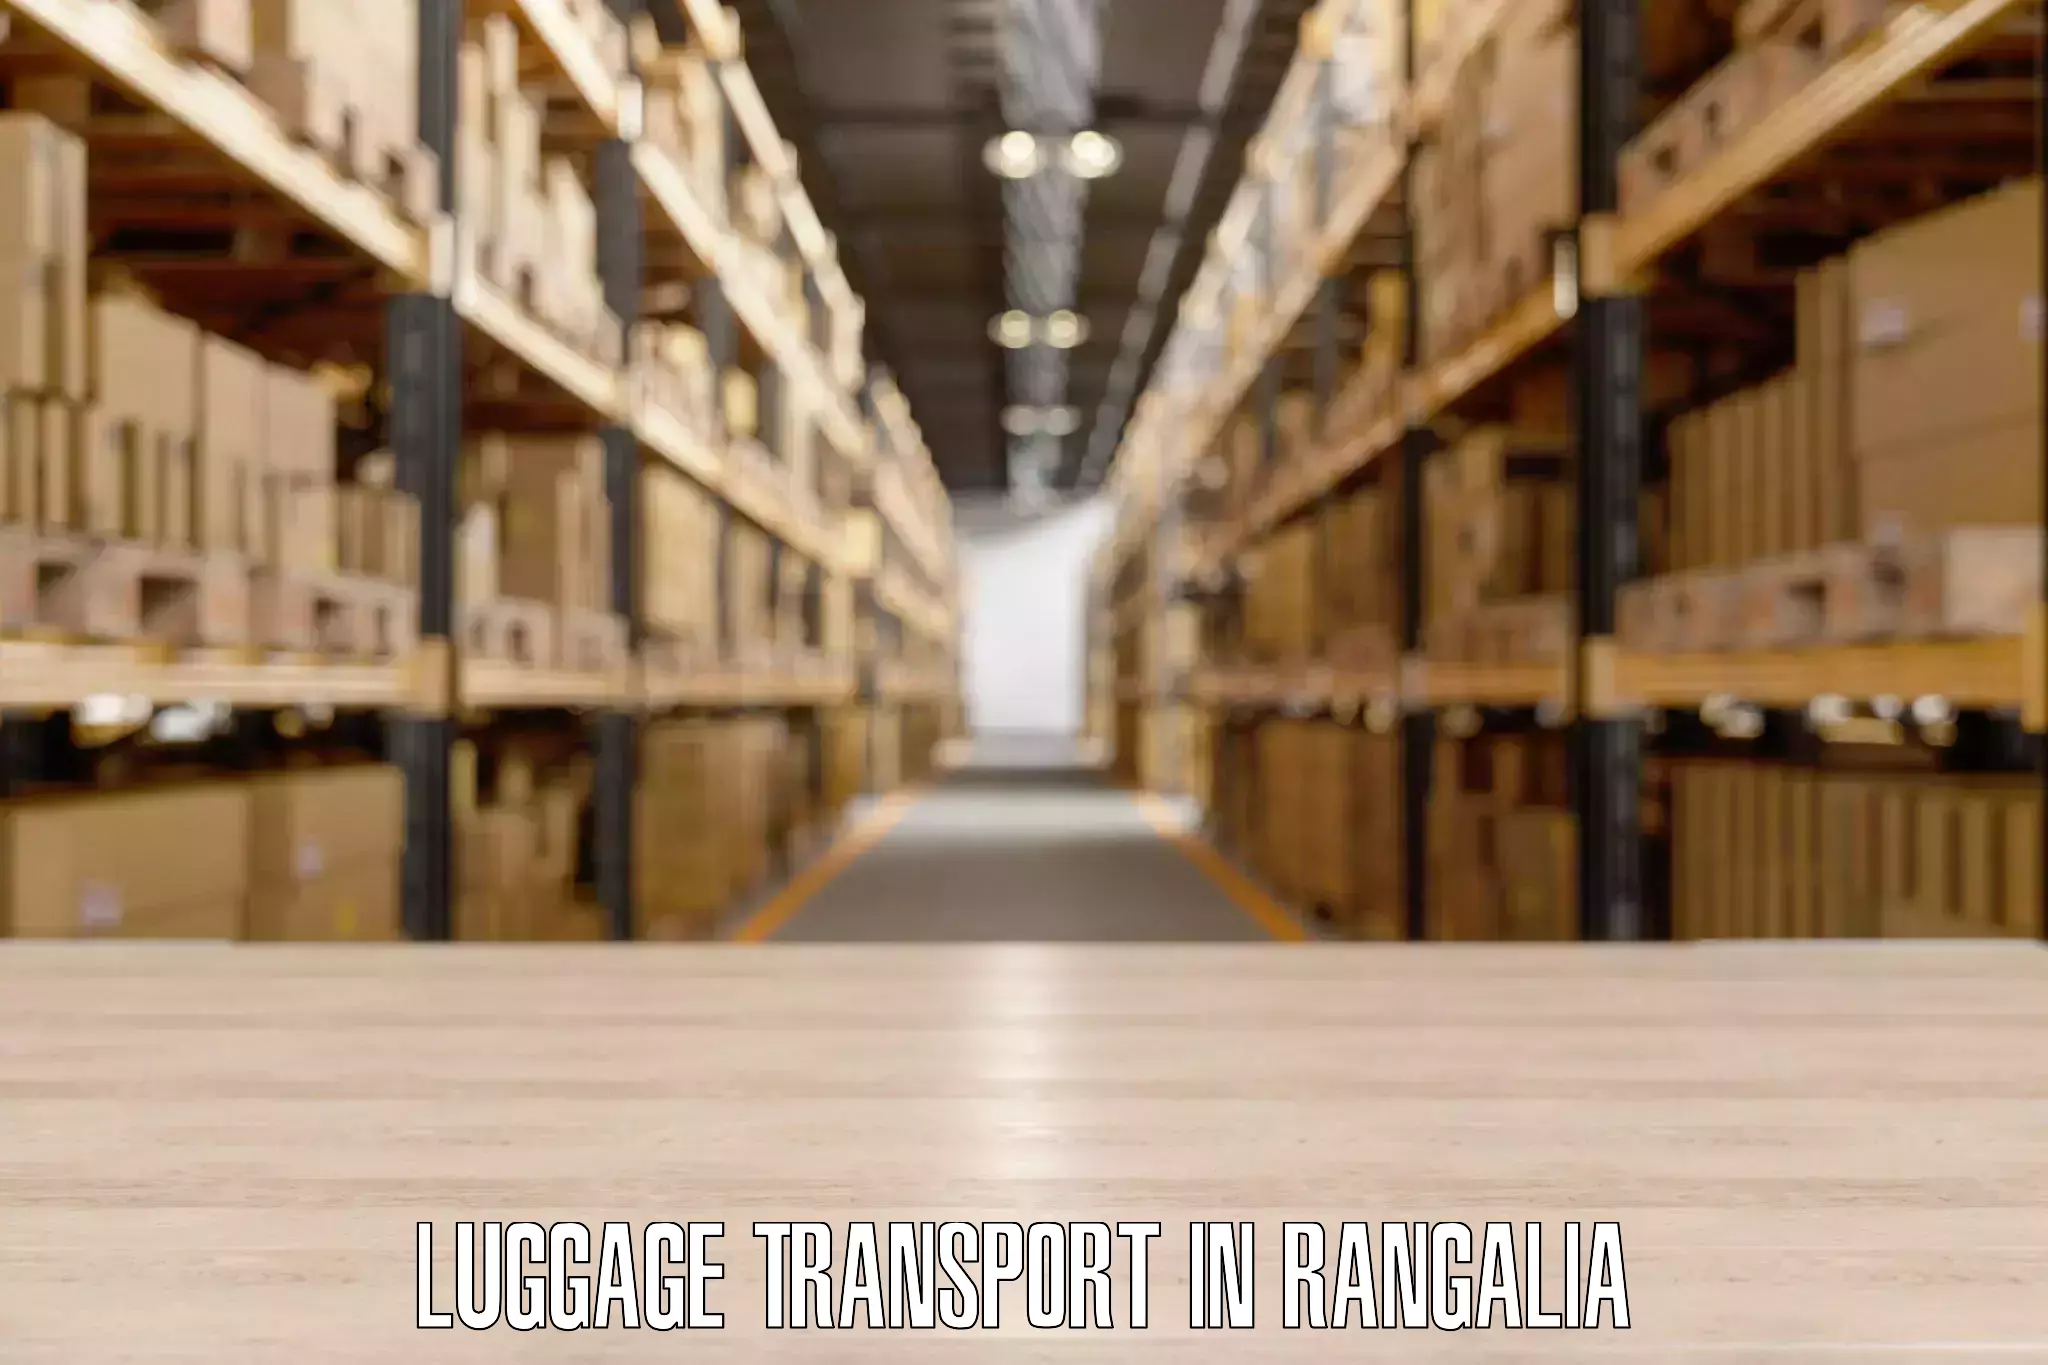 Nationwide luggage transport in Rangalia